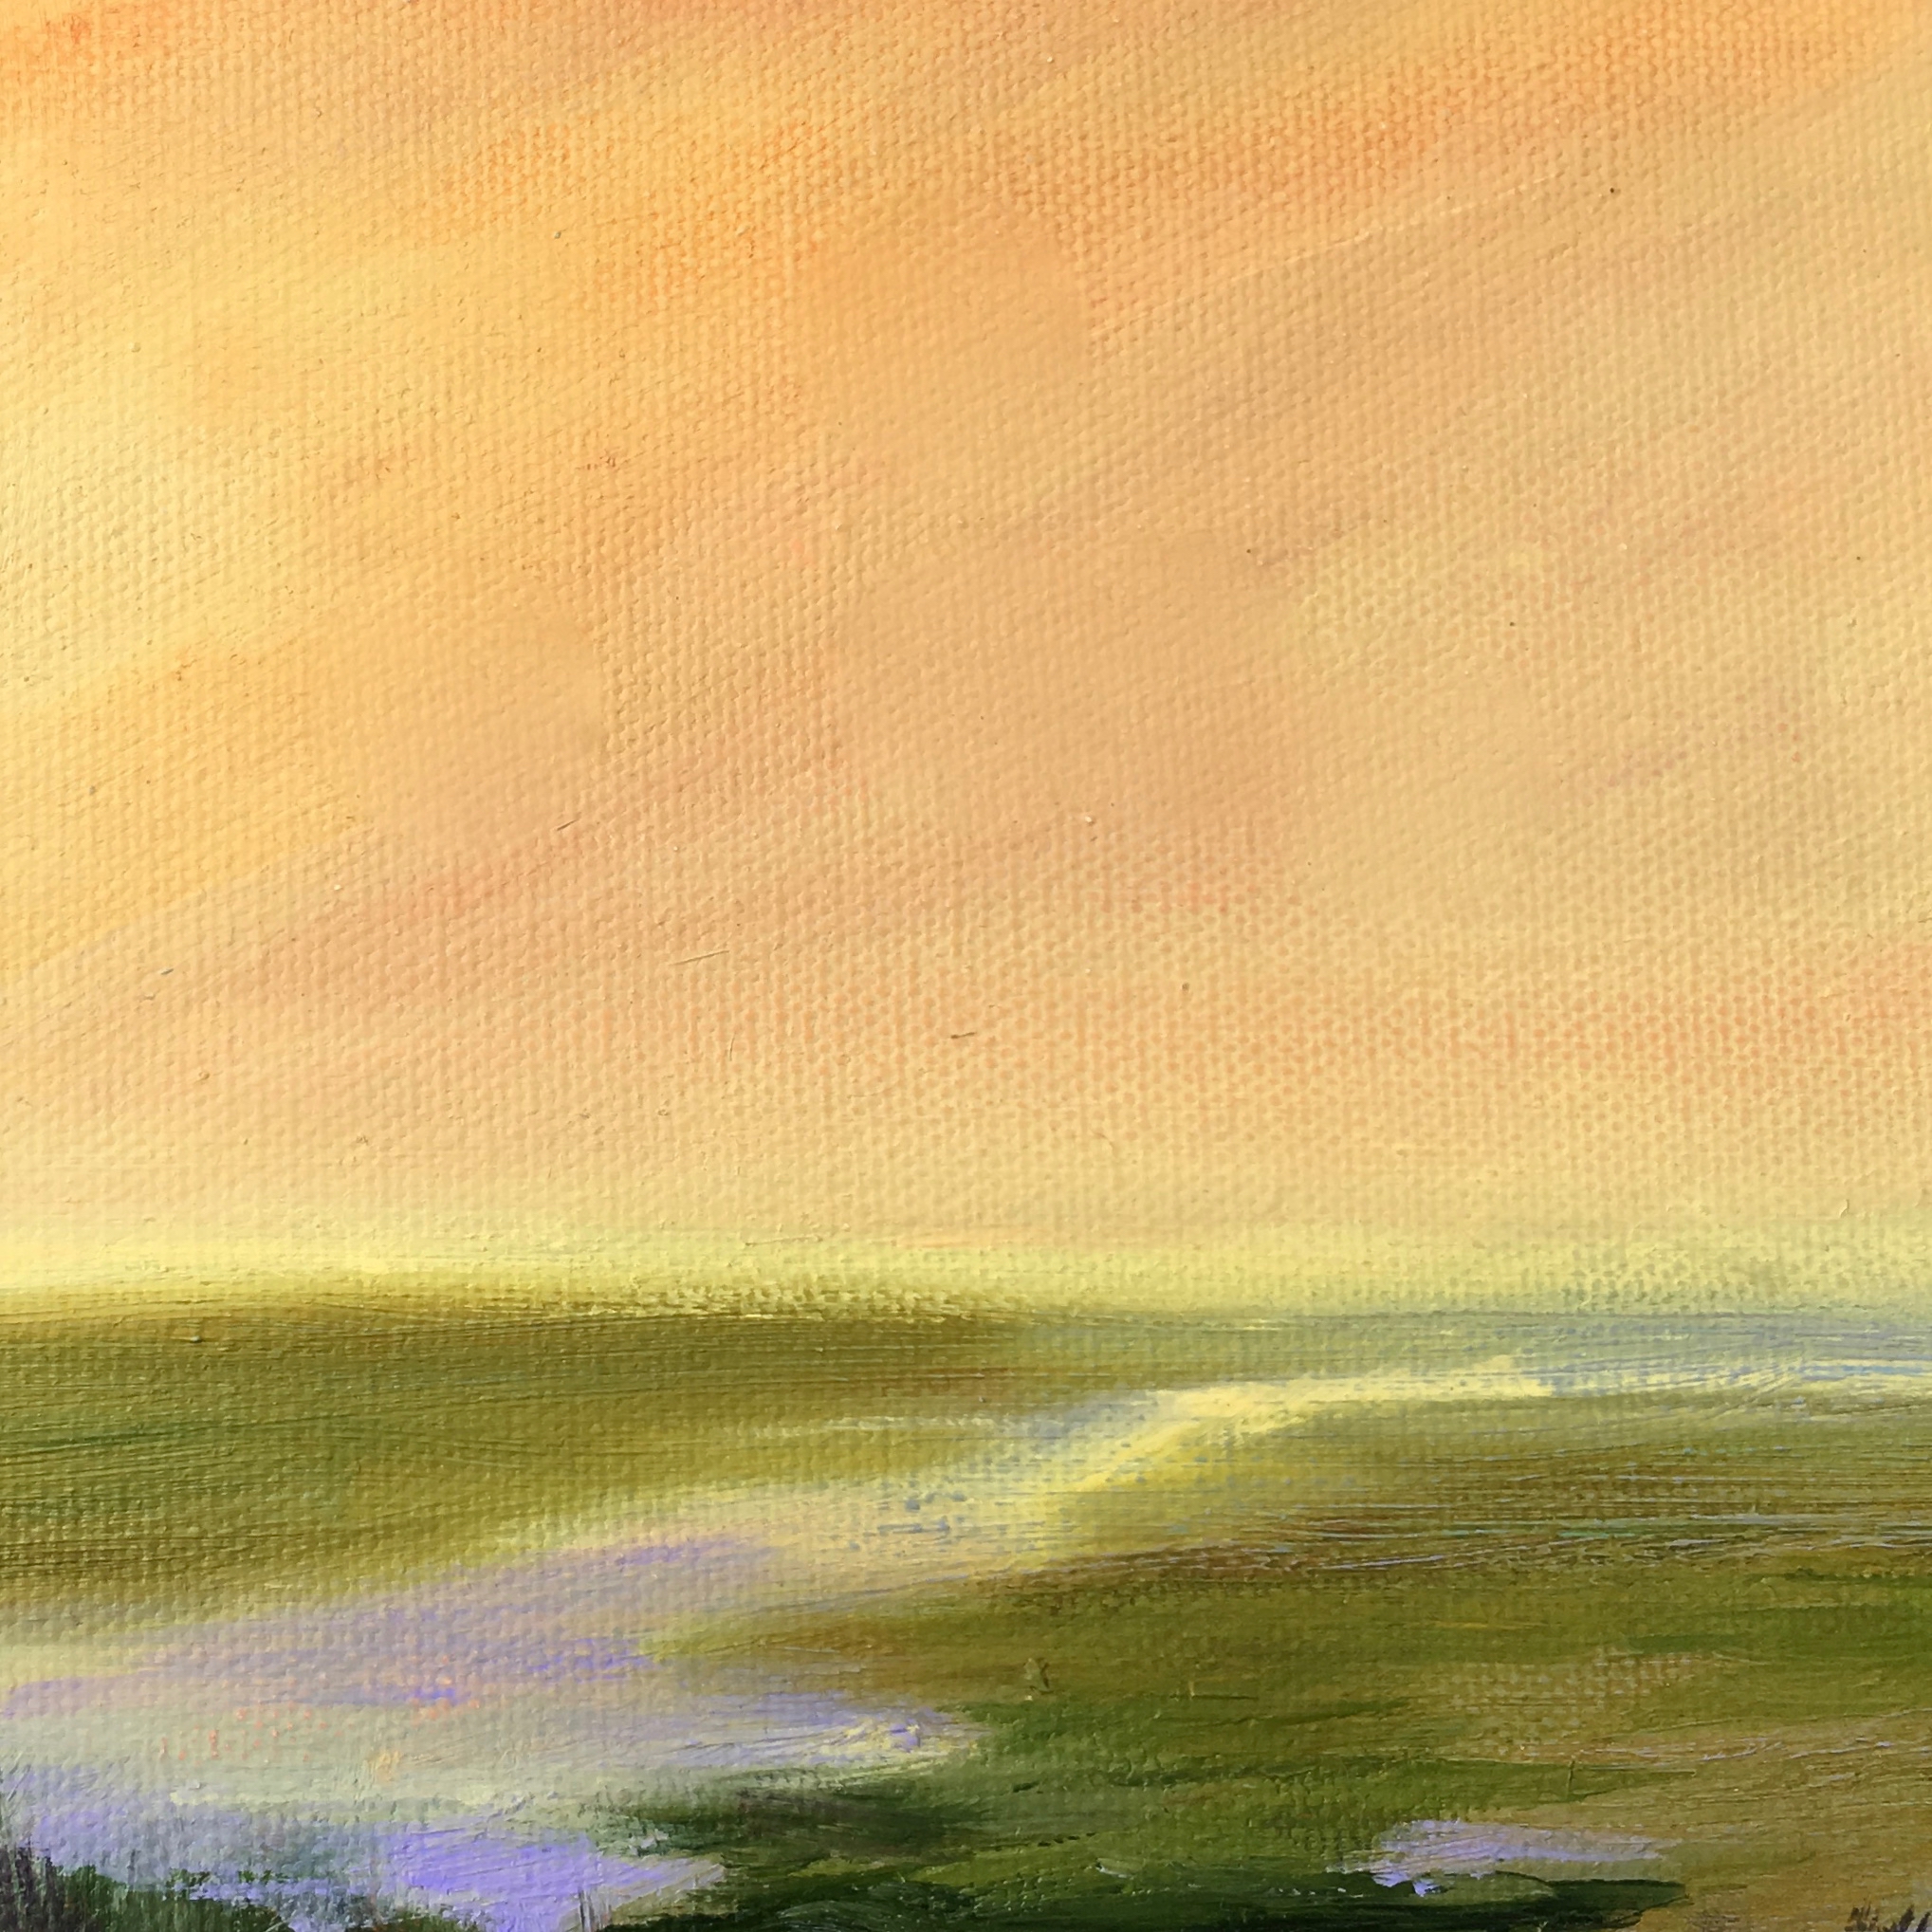   Morning Light   Oil on Canvas  6x6 